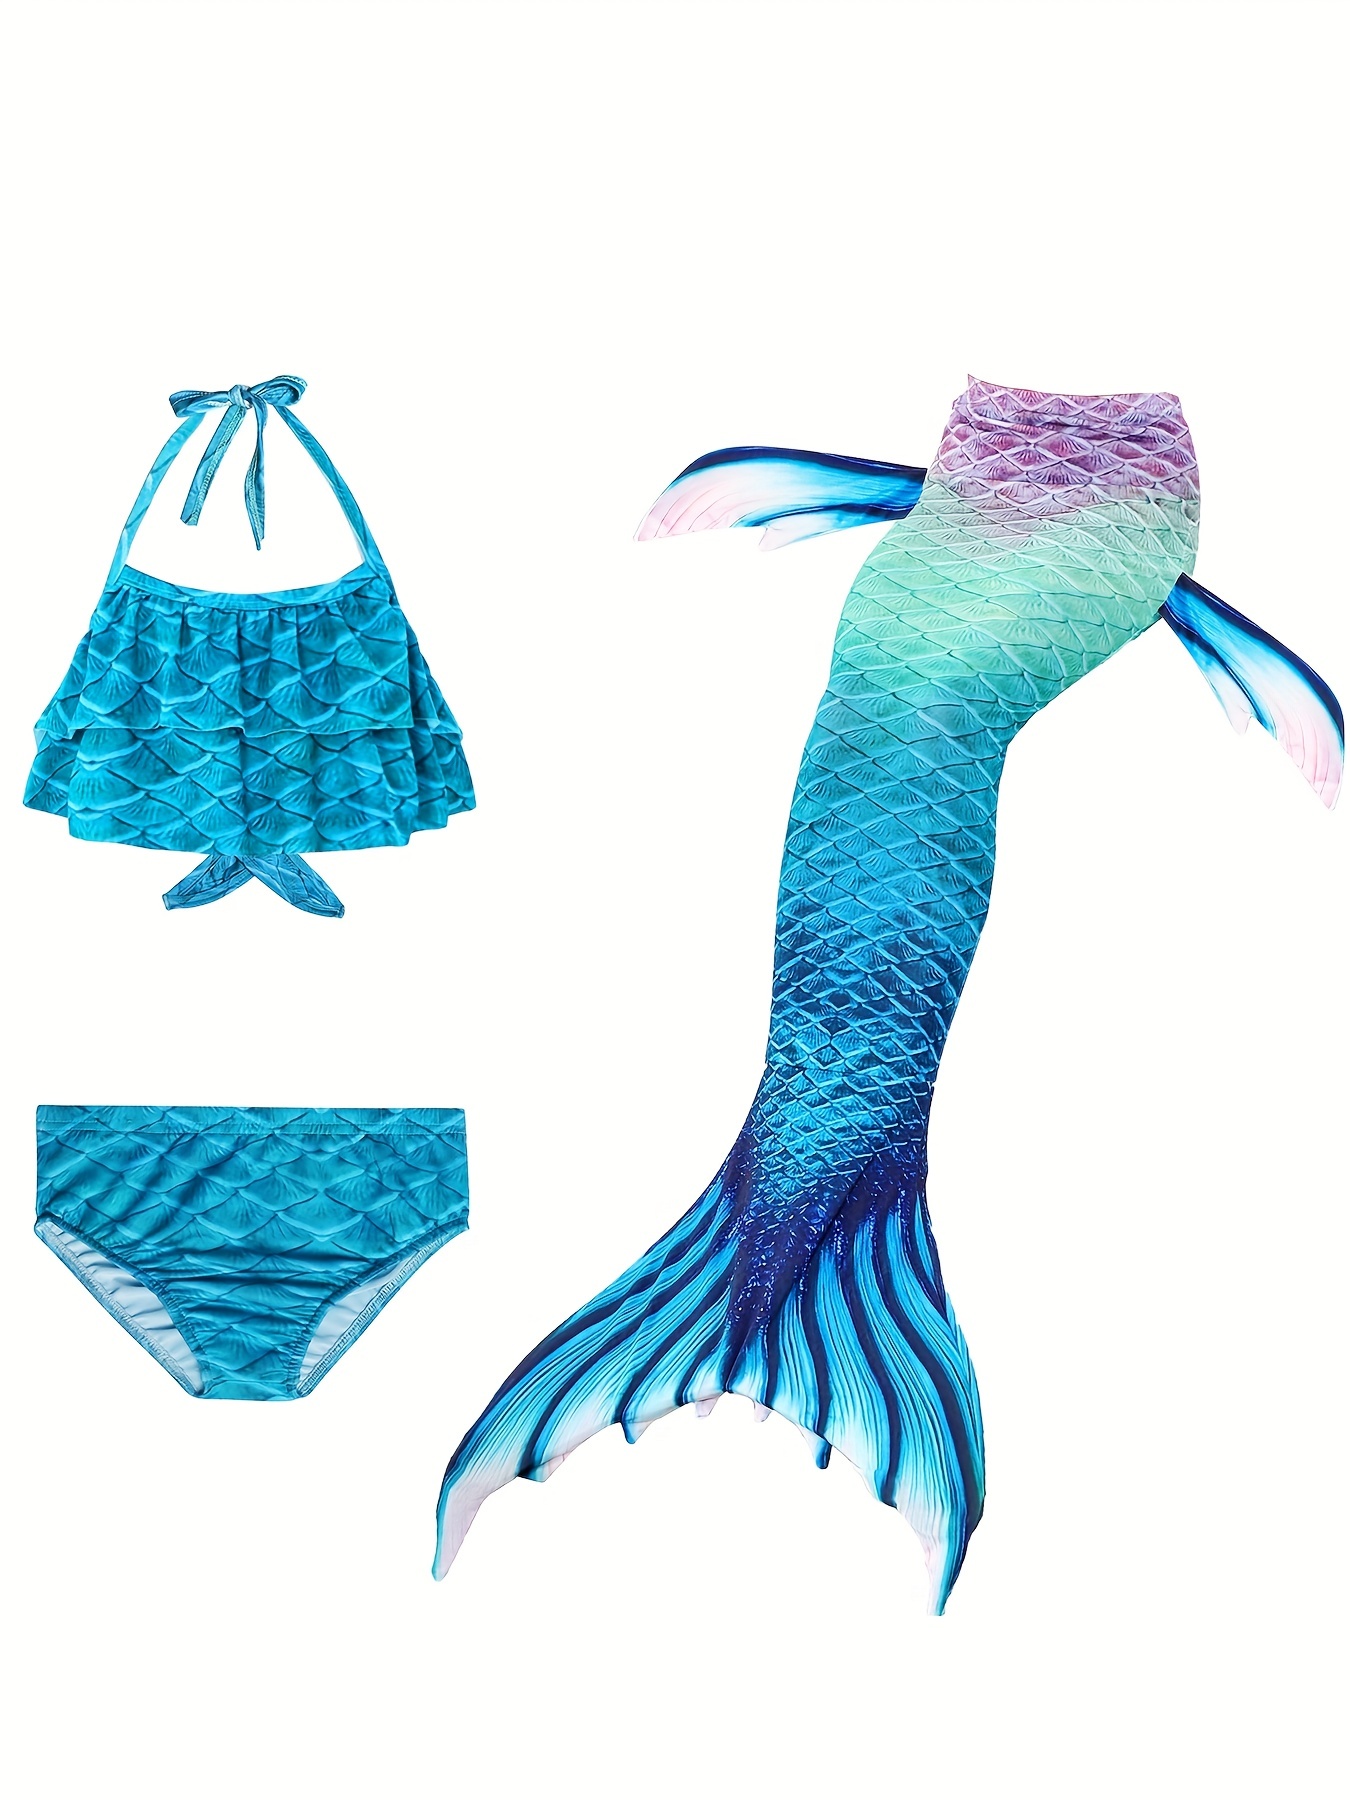 Afunbaby Kids Girls Two-piece Bathing Suit, Fish Scale Print Swimming  Costume Swimsuit Bikini Set